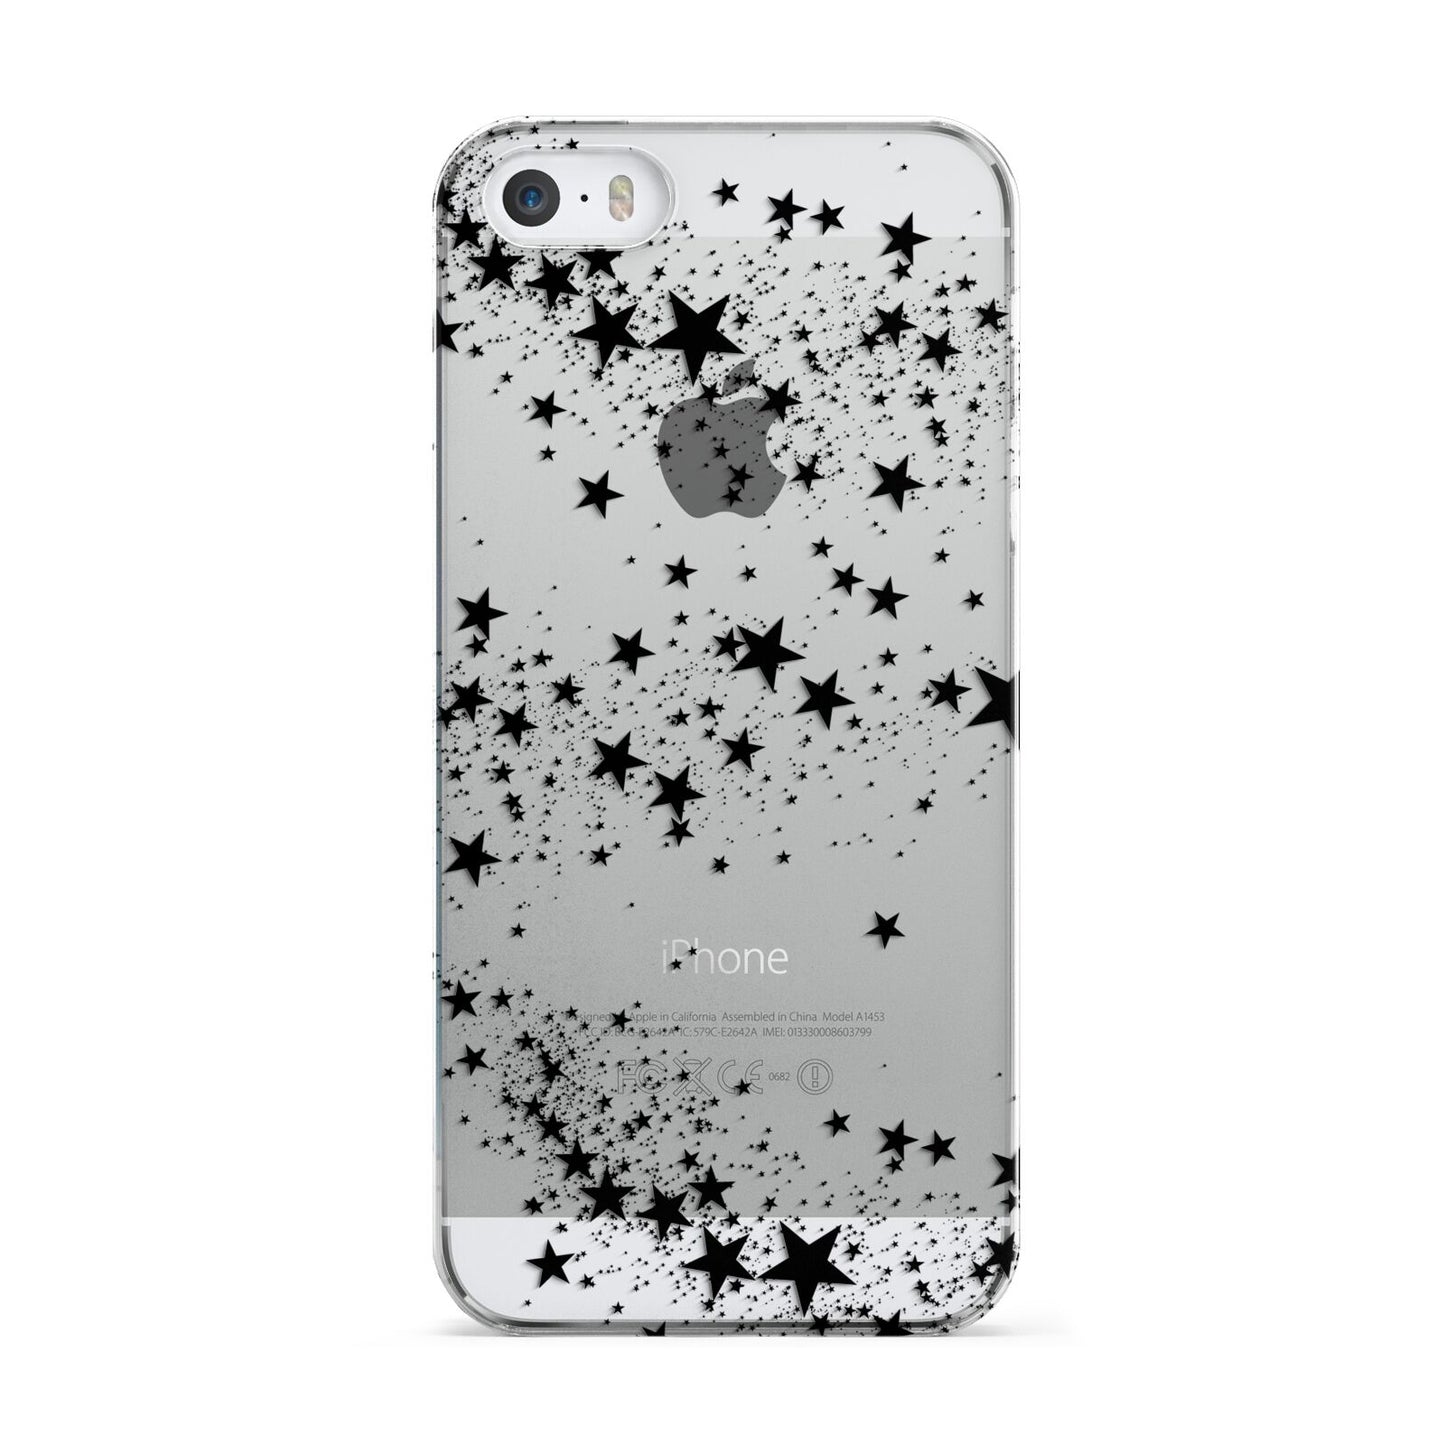 Shooting Stars Apple iPhone 5 Case